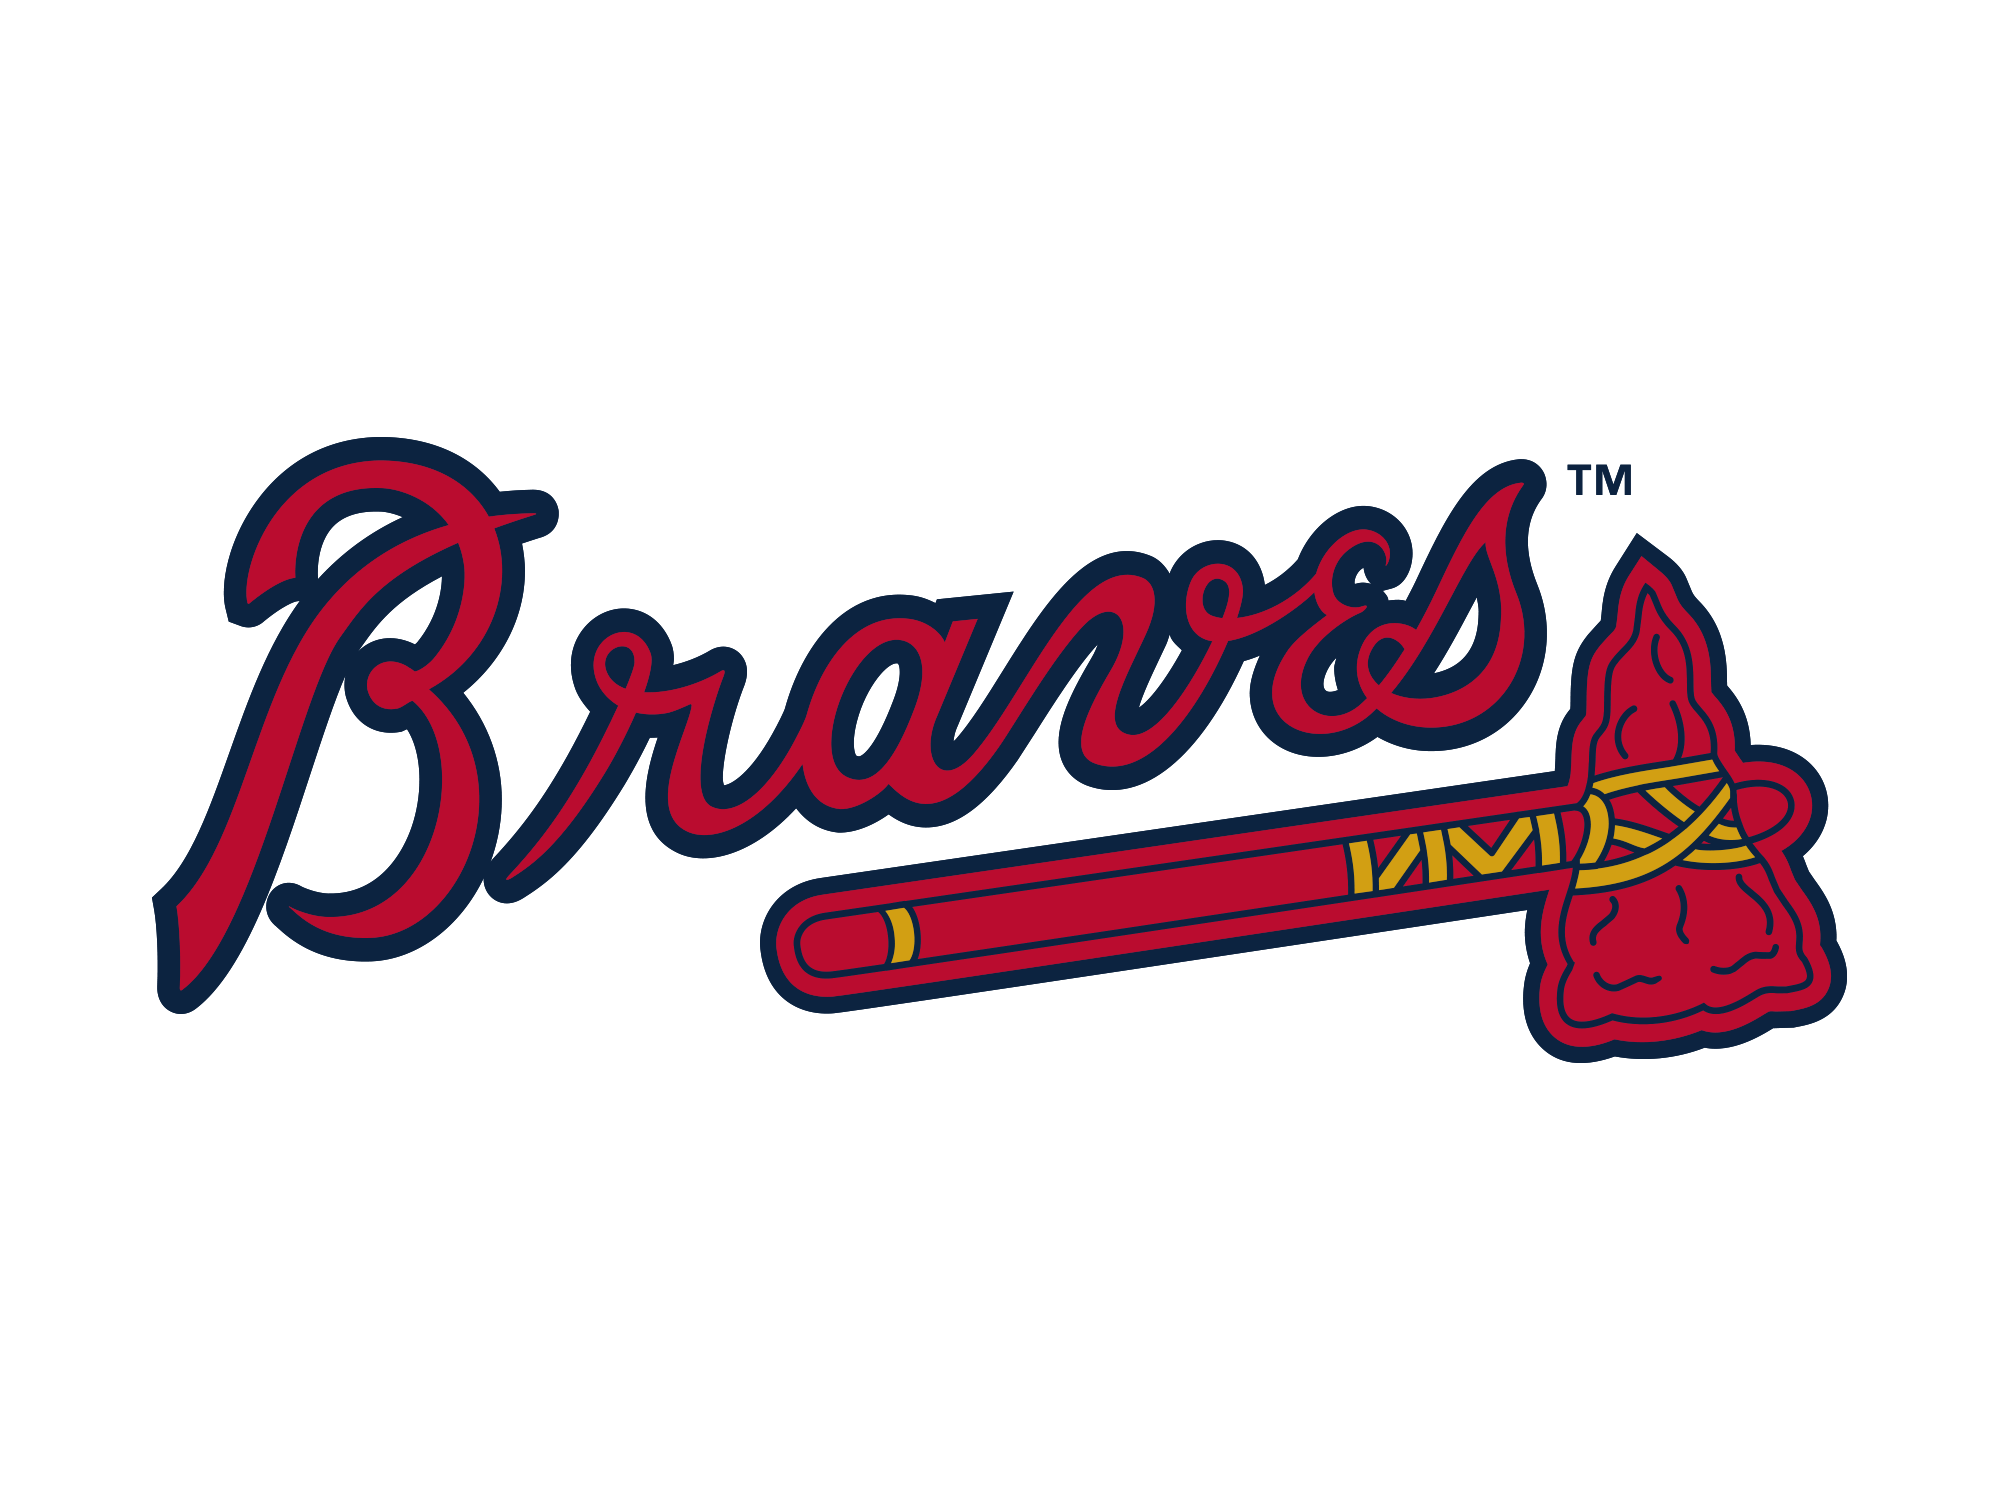 atlanta braves - Atlanta Braves Baseball - Sticker